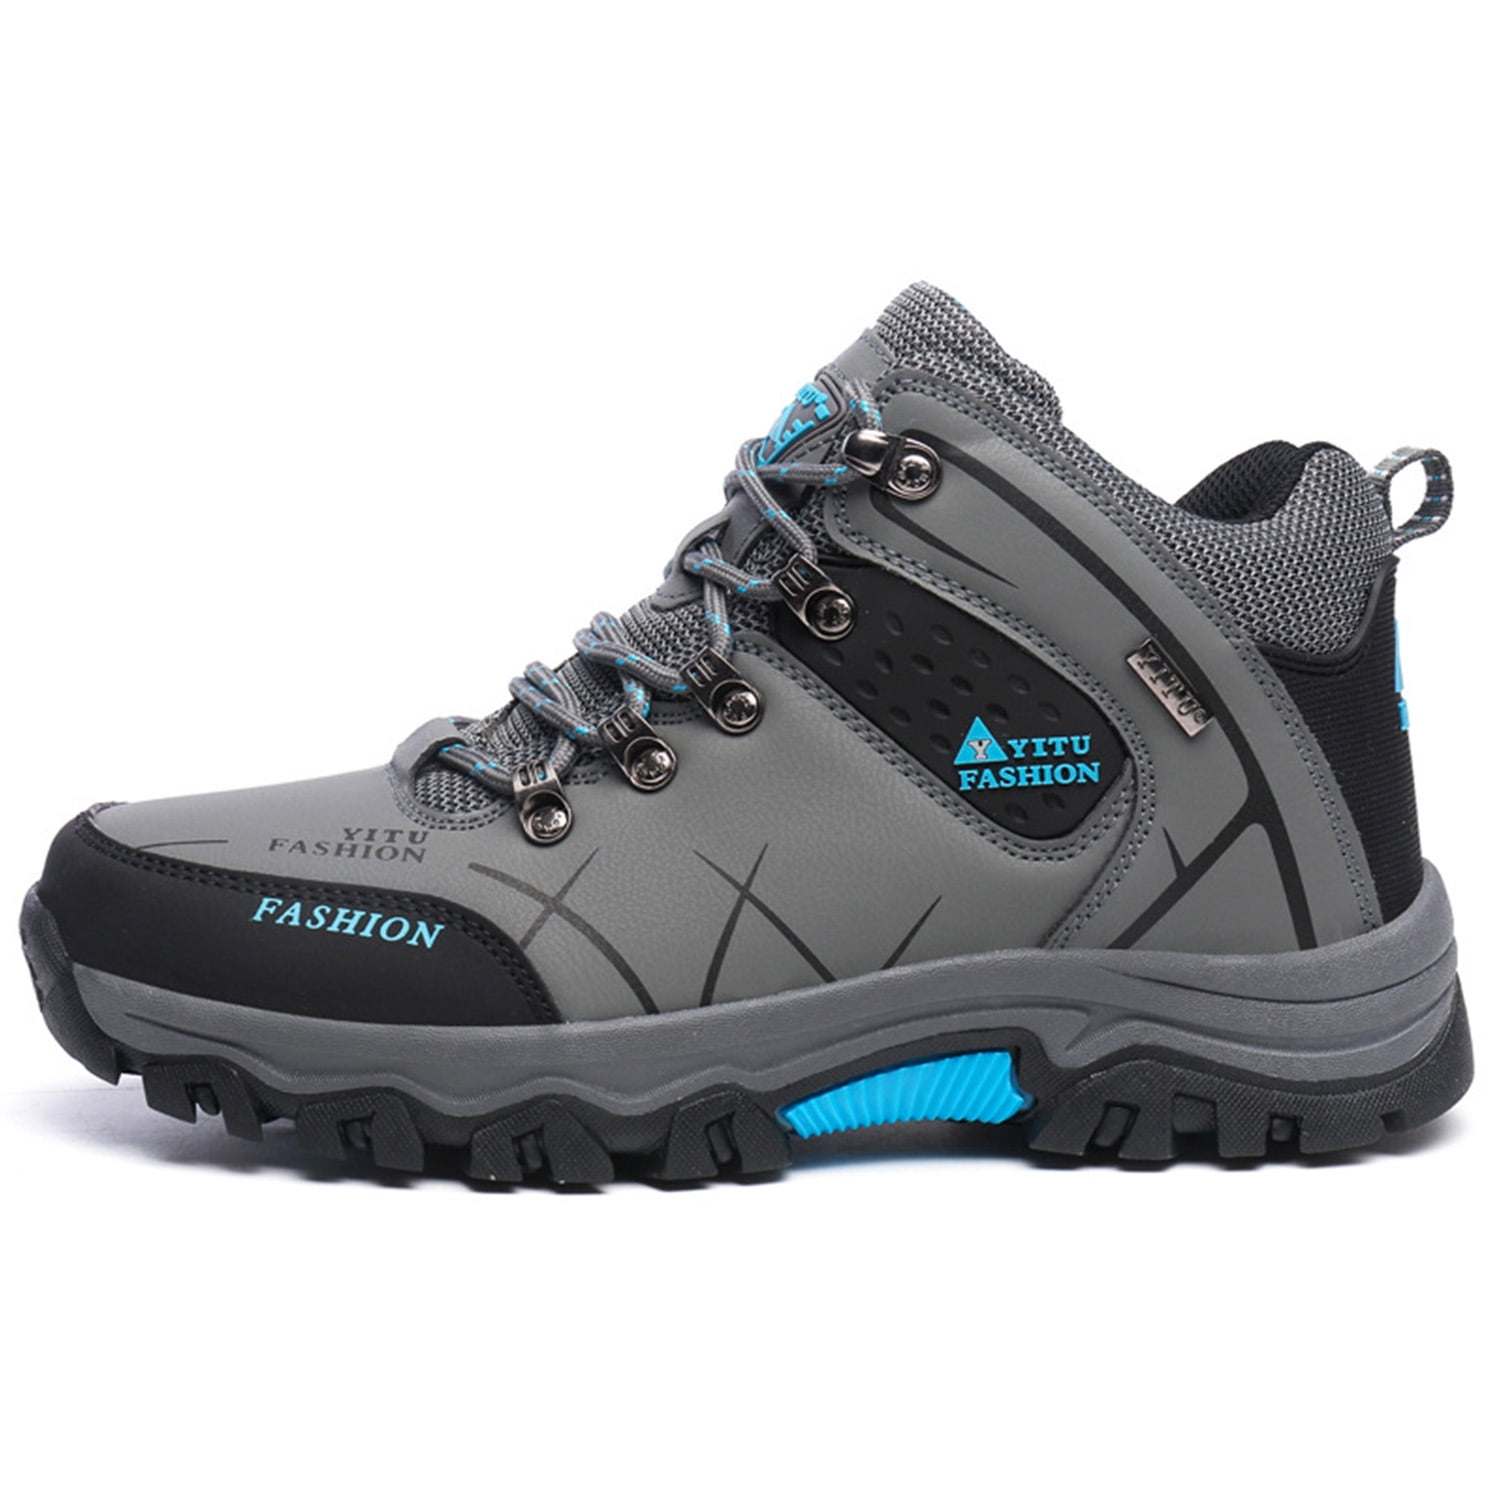 Dannto Men's Trail Running Shoes Outdoor Hiking Sneakers Walking Trekking Cross Training 